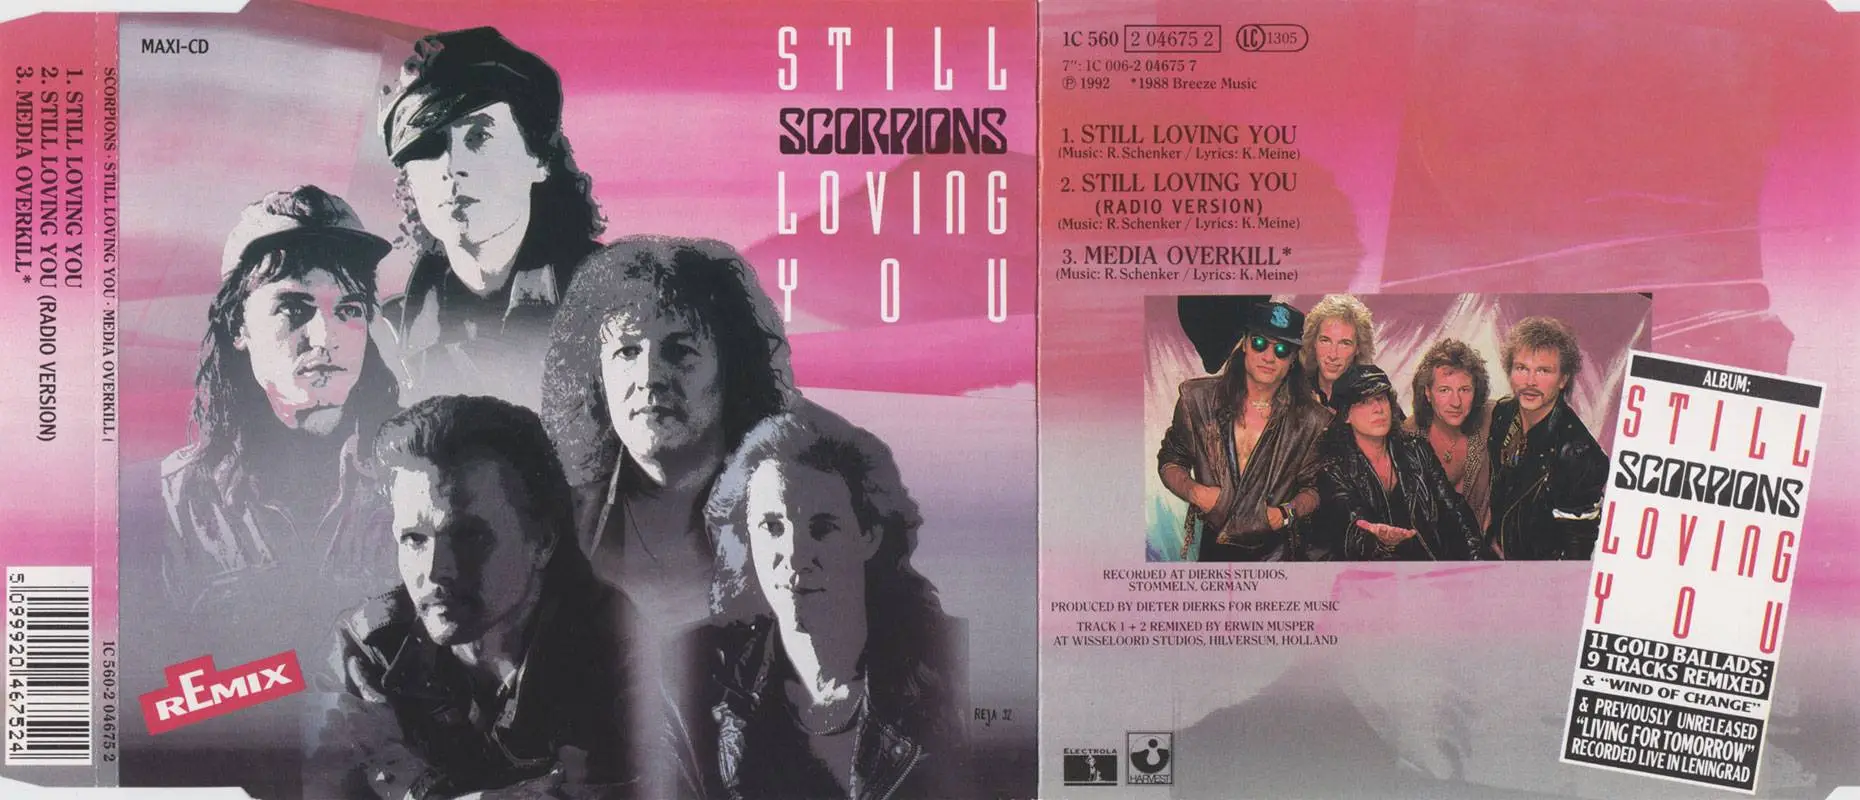 L still loving you. Scorpions альбом 1992. Scorpions "still loving you" 1992 обложка. Обложка альбома Scorpions--1992-still loving. Обложка Scorpions still.